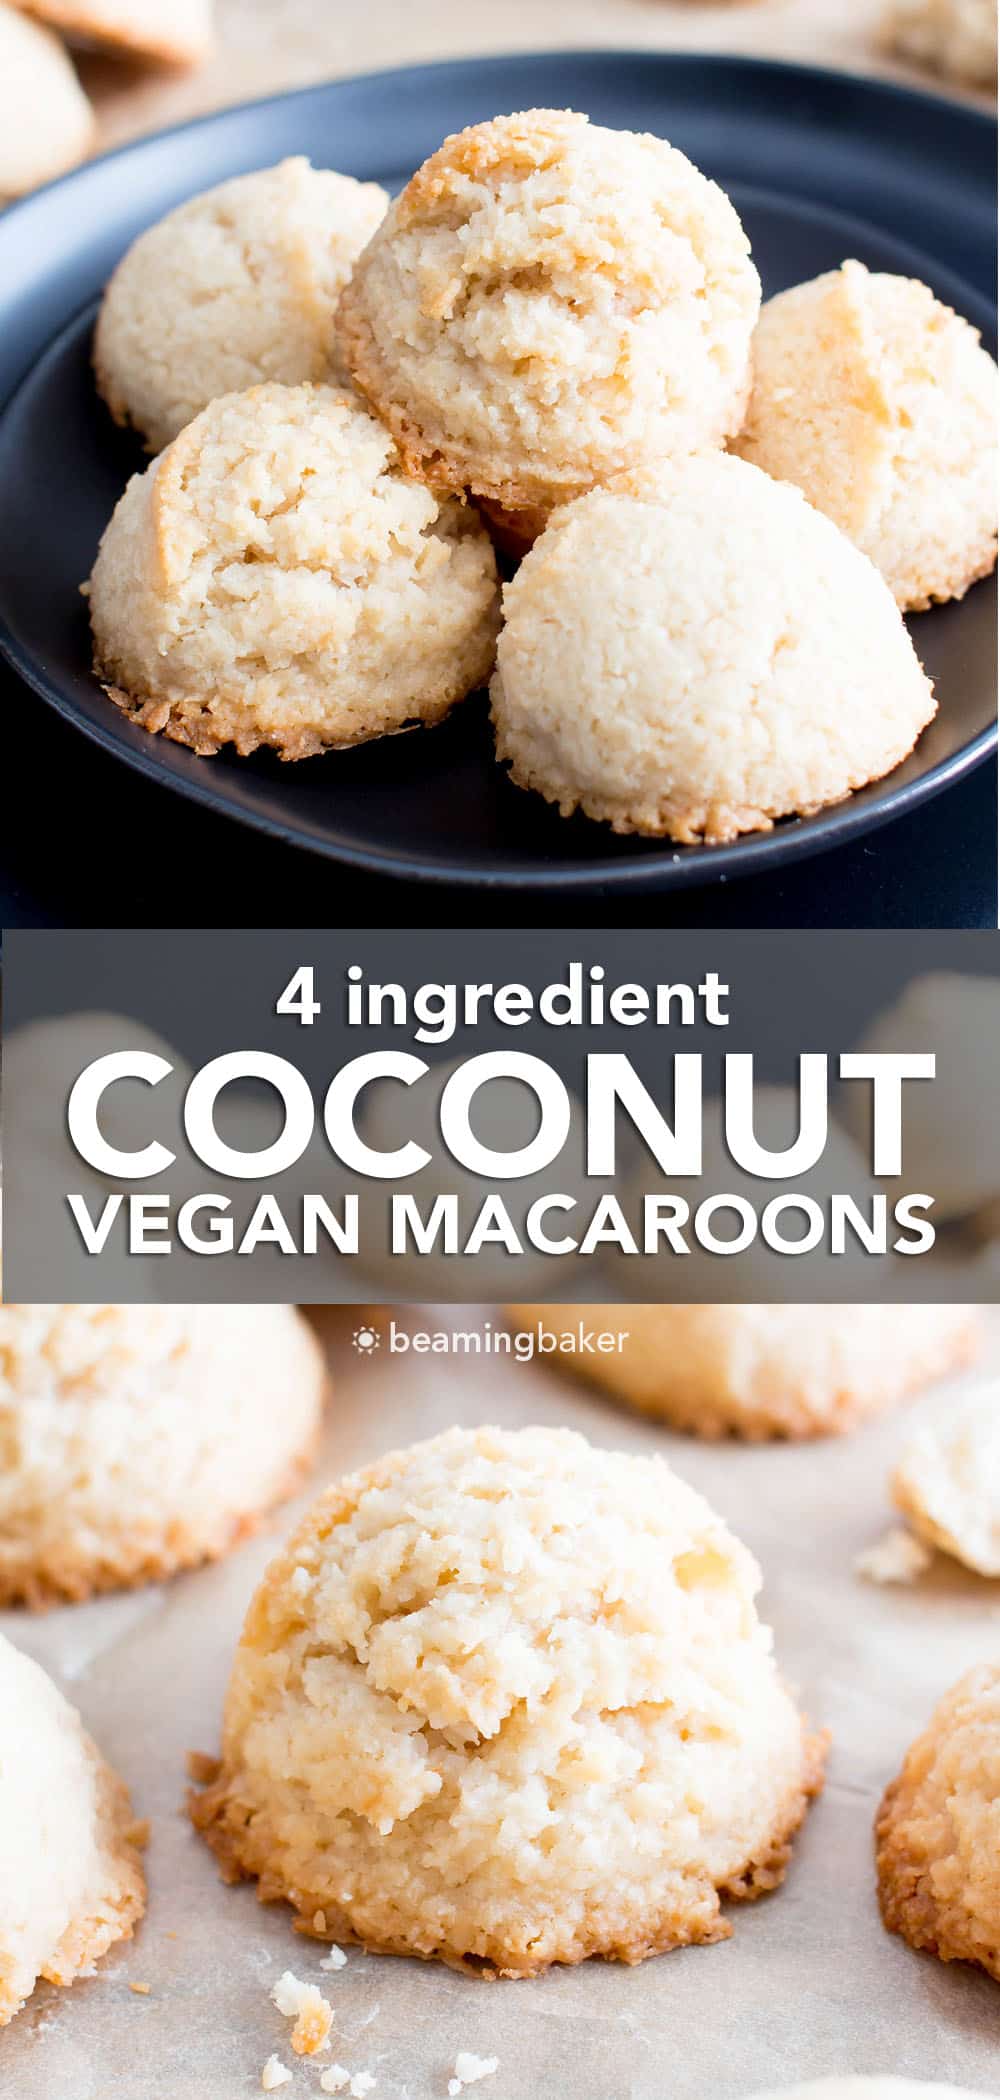 Vegan Coconut Macaroons: Irresistibly chewy Vegan Coconut Macaroons with crisp edges and sweet coconut flavor. Just 4 ingredients! Paleo, Healthy. #Vegan #Coconut #Macaroons #Paleo #Healthy | Recipe at BeamingBaker.com